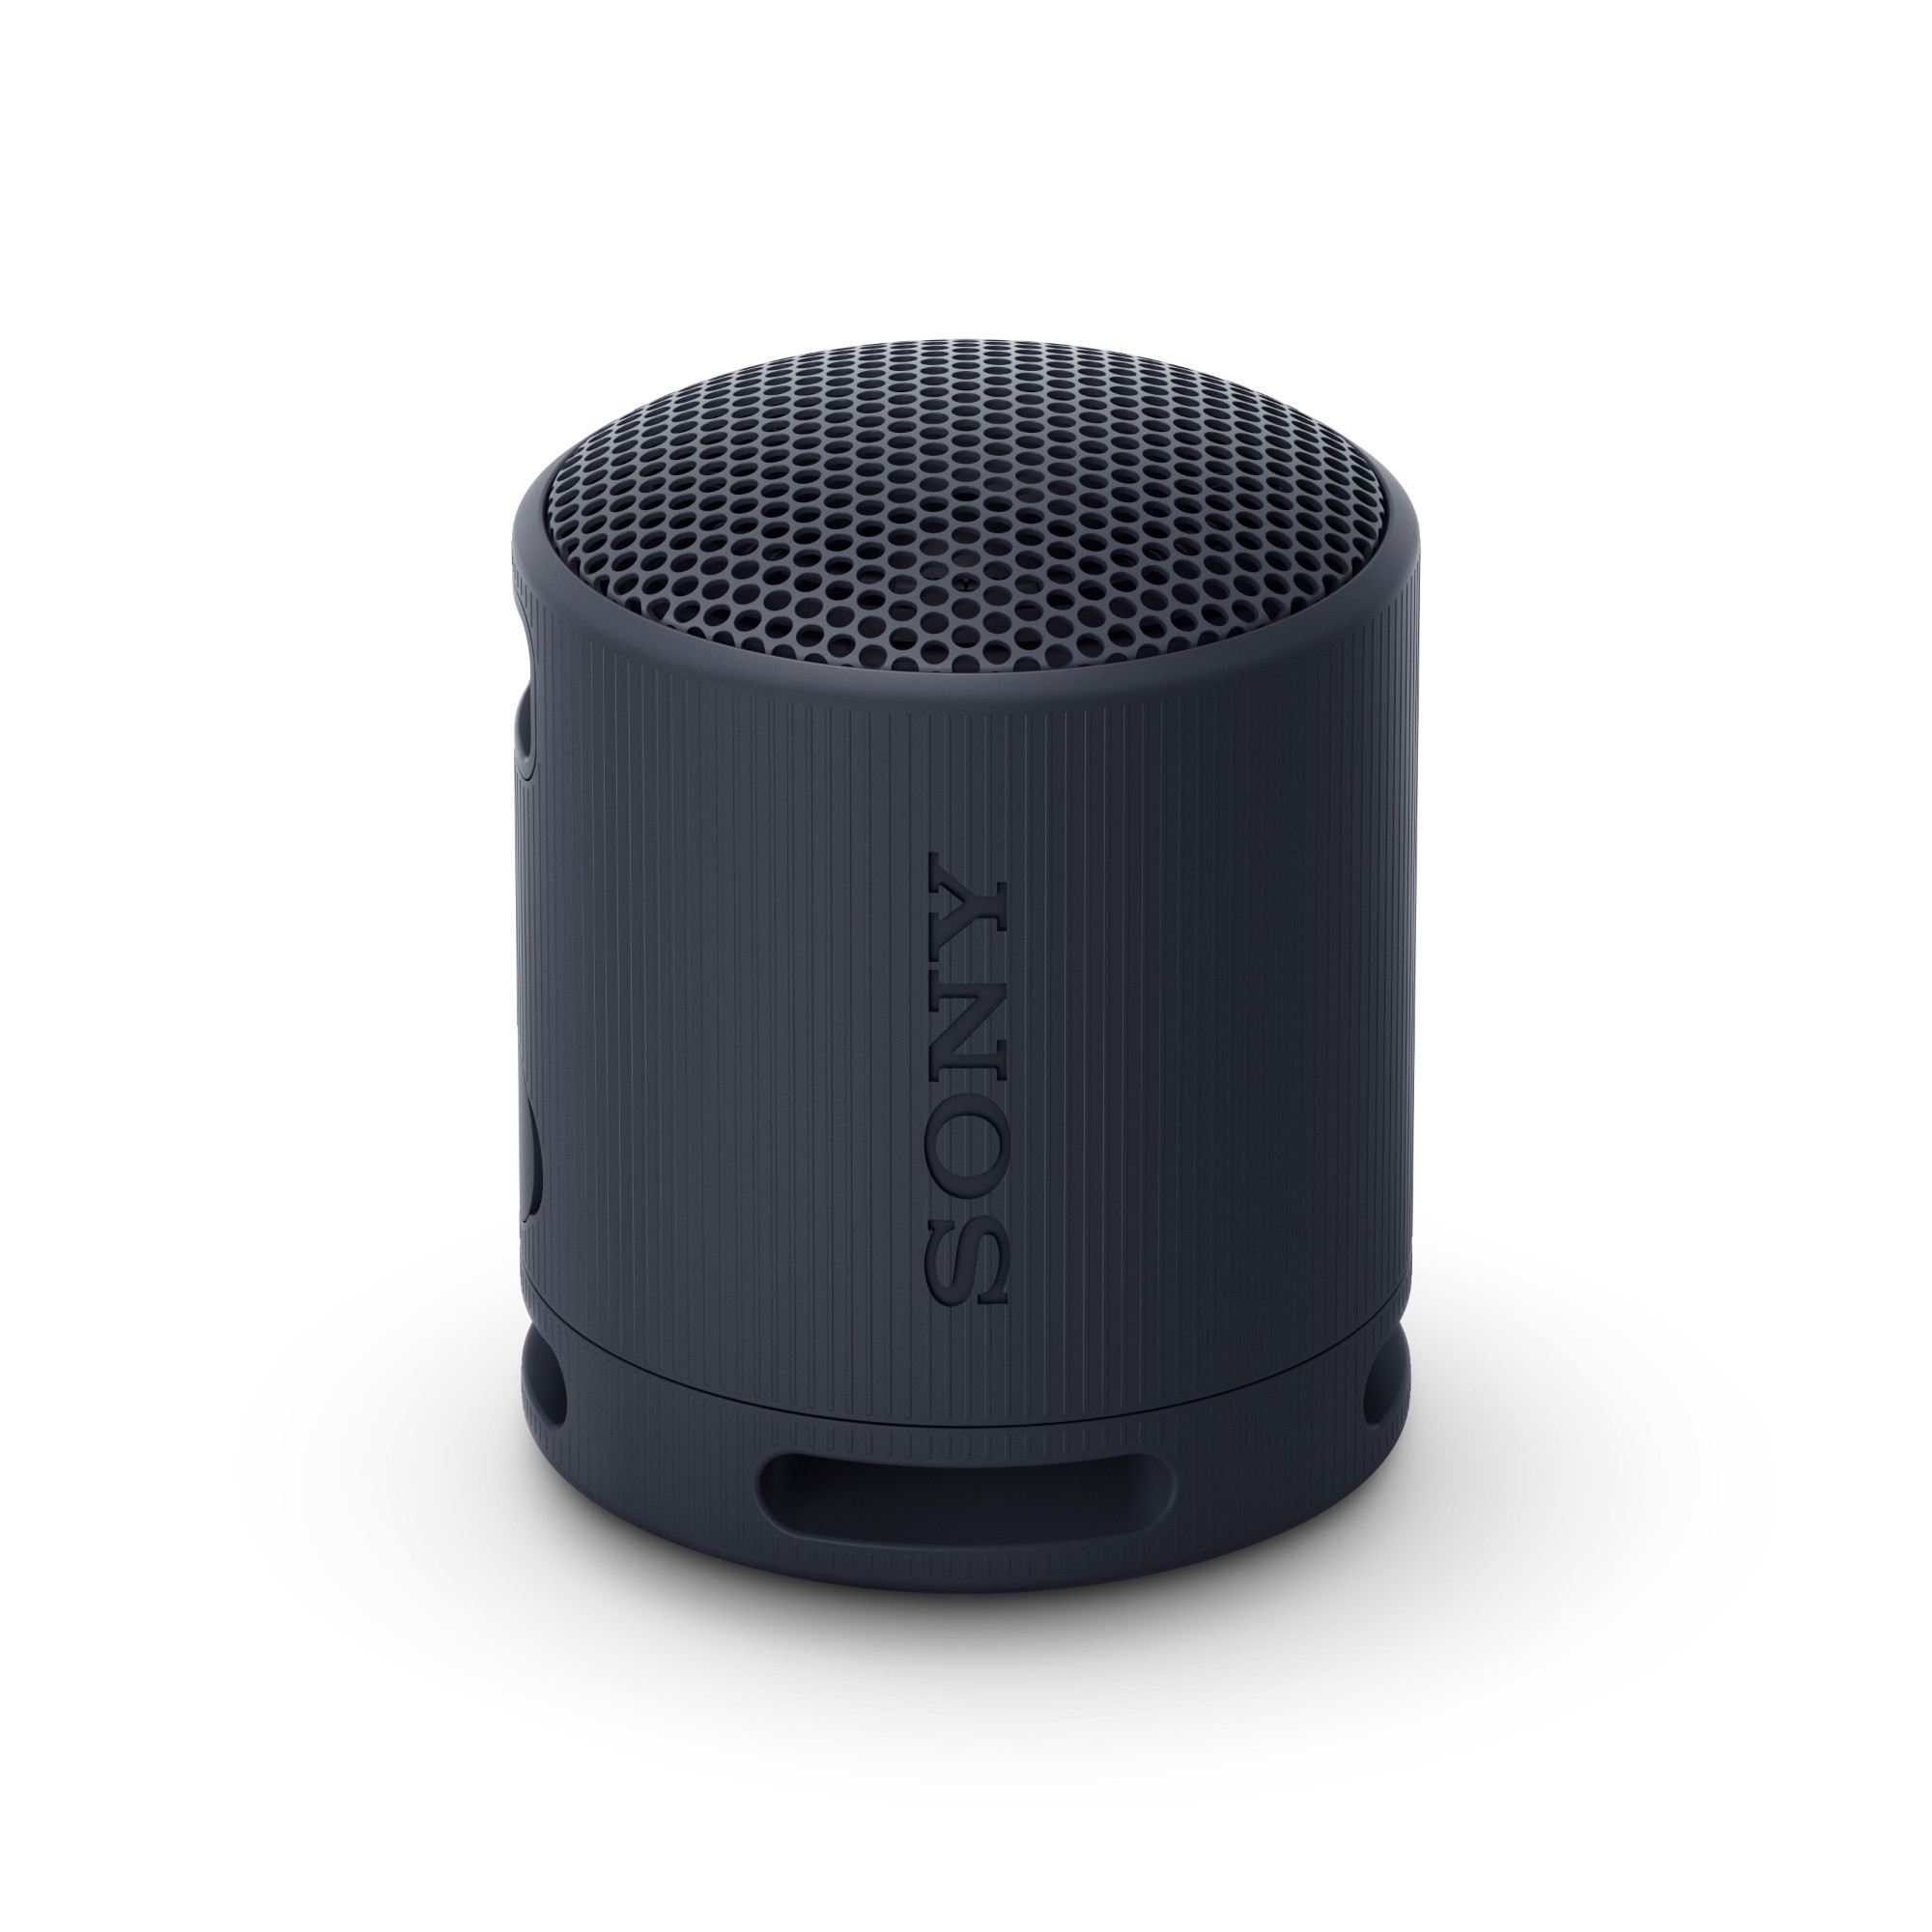 Sony SRS-XB100 - Wireless Bluetooth Portable Speaker, Durable IP67 Waterproof & Dustproof, 16 Hour Battery, Eco, Outdoor and Travel in Black